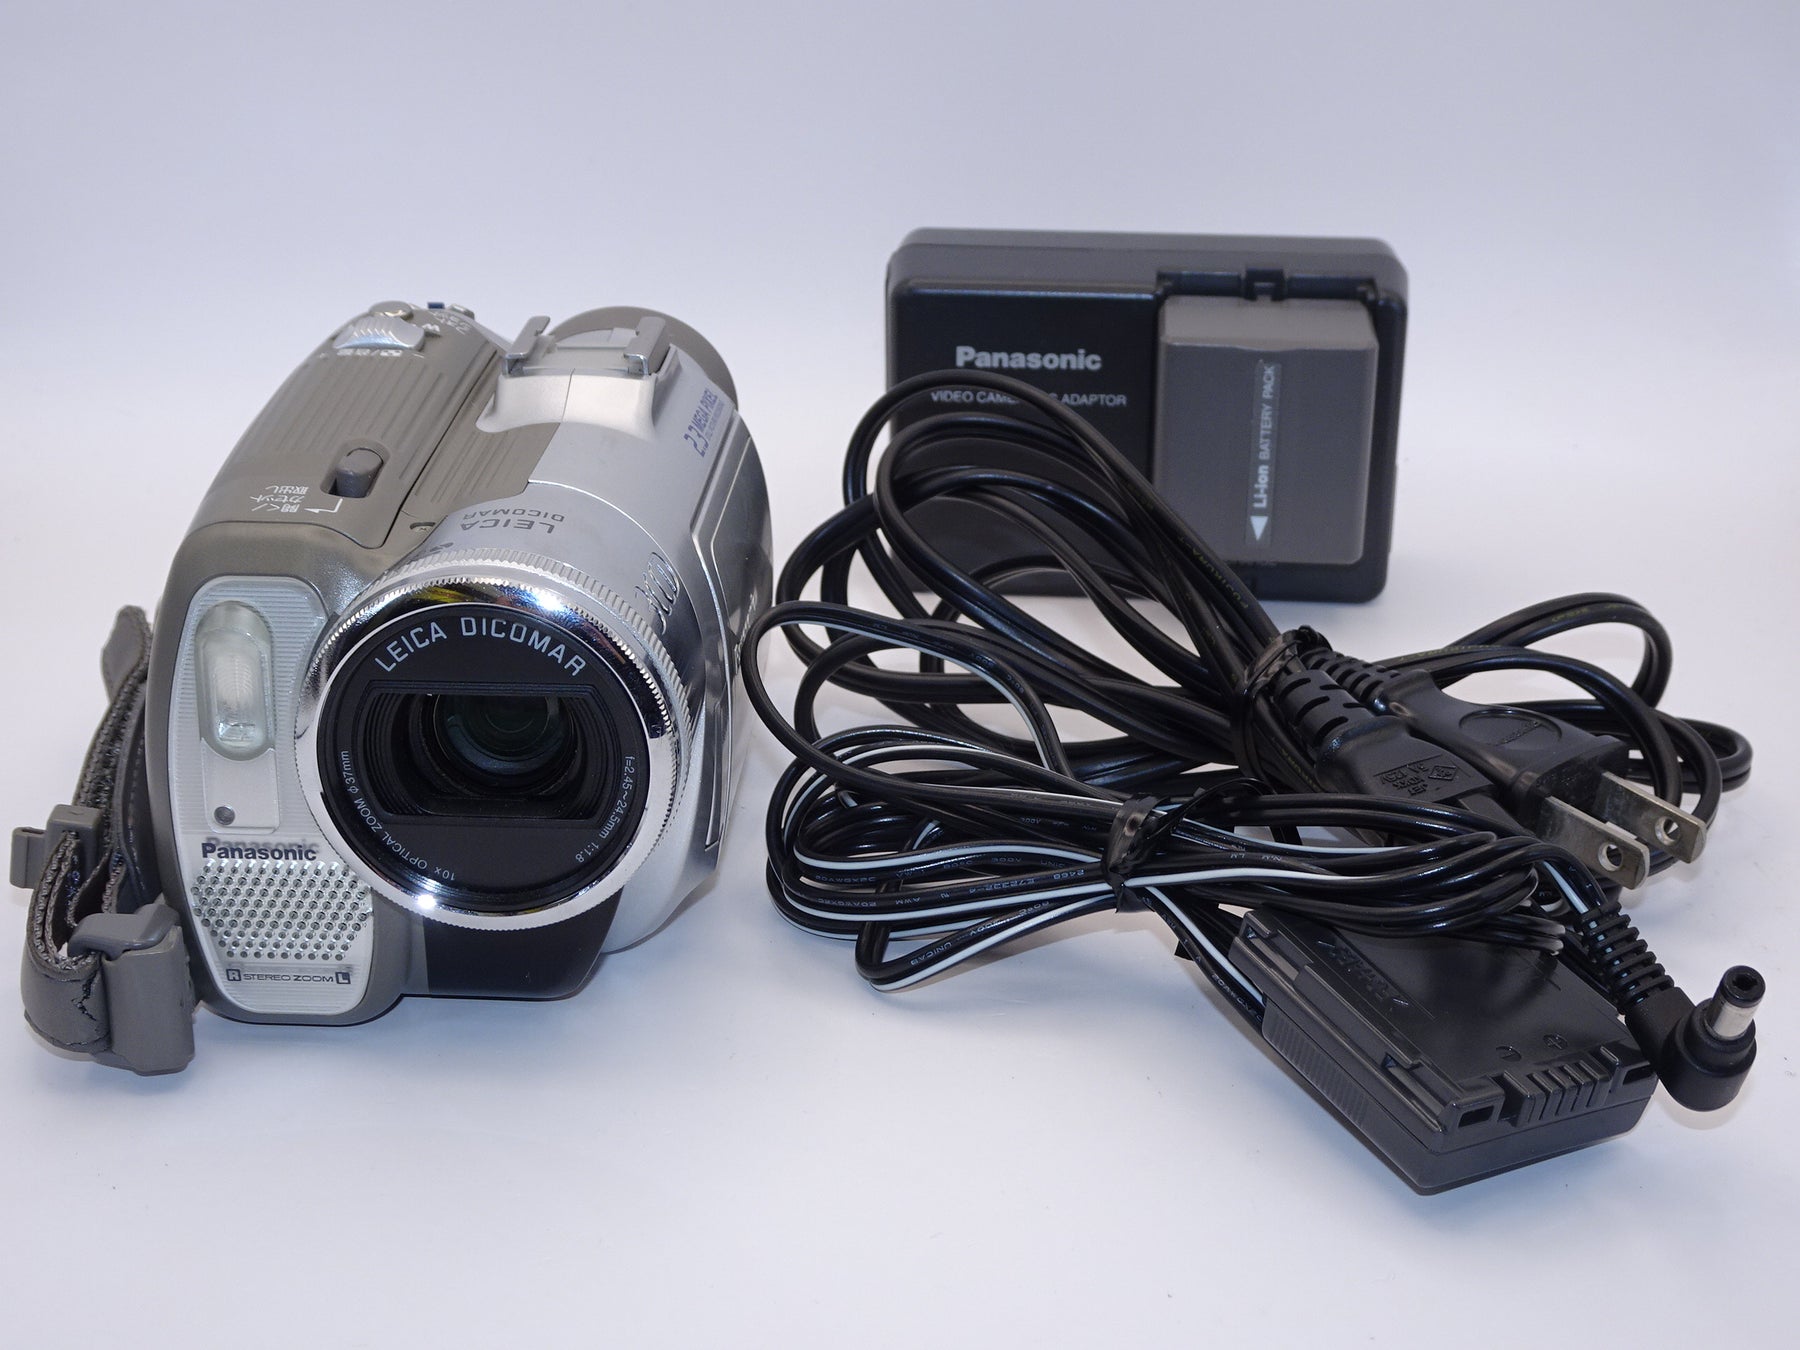 Panasonic デジタル ビデオカメラ nv gs150 - ビデオカメラ